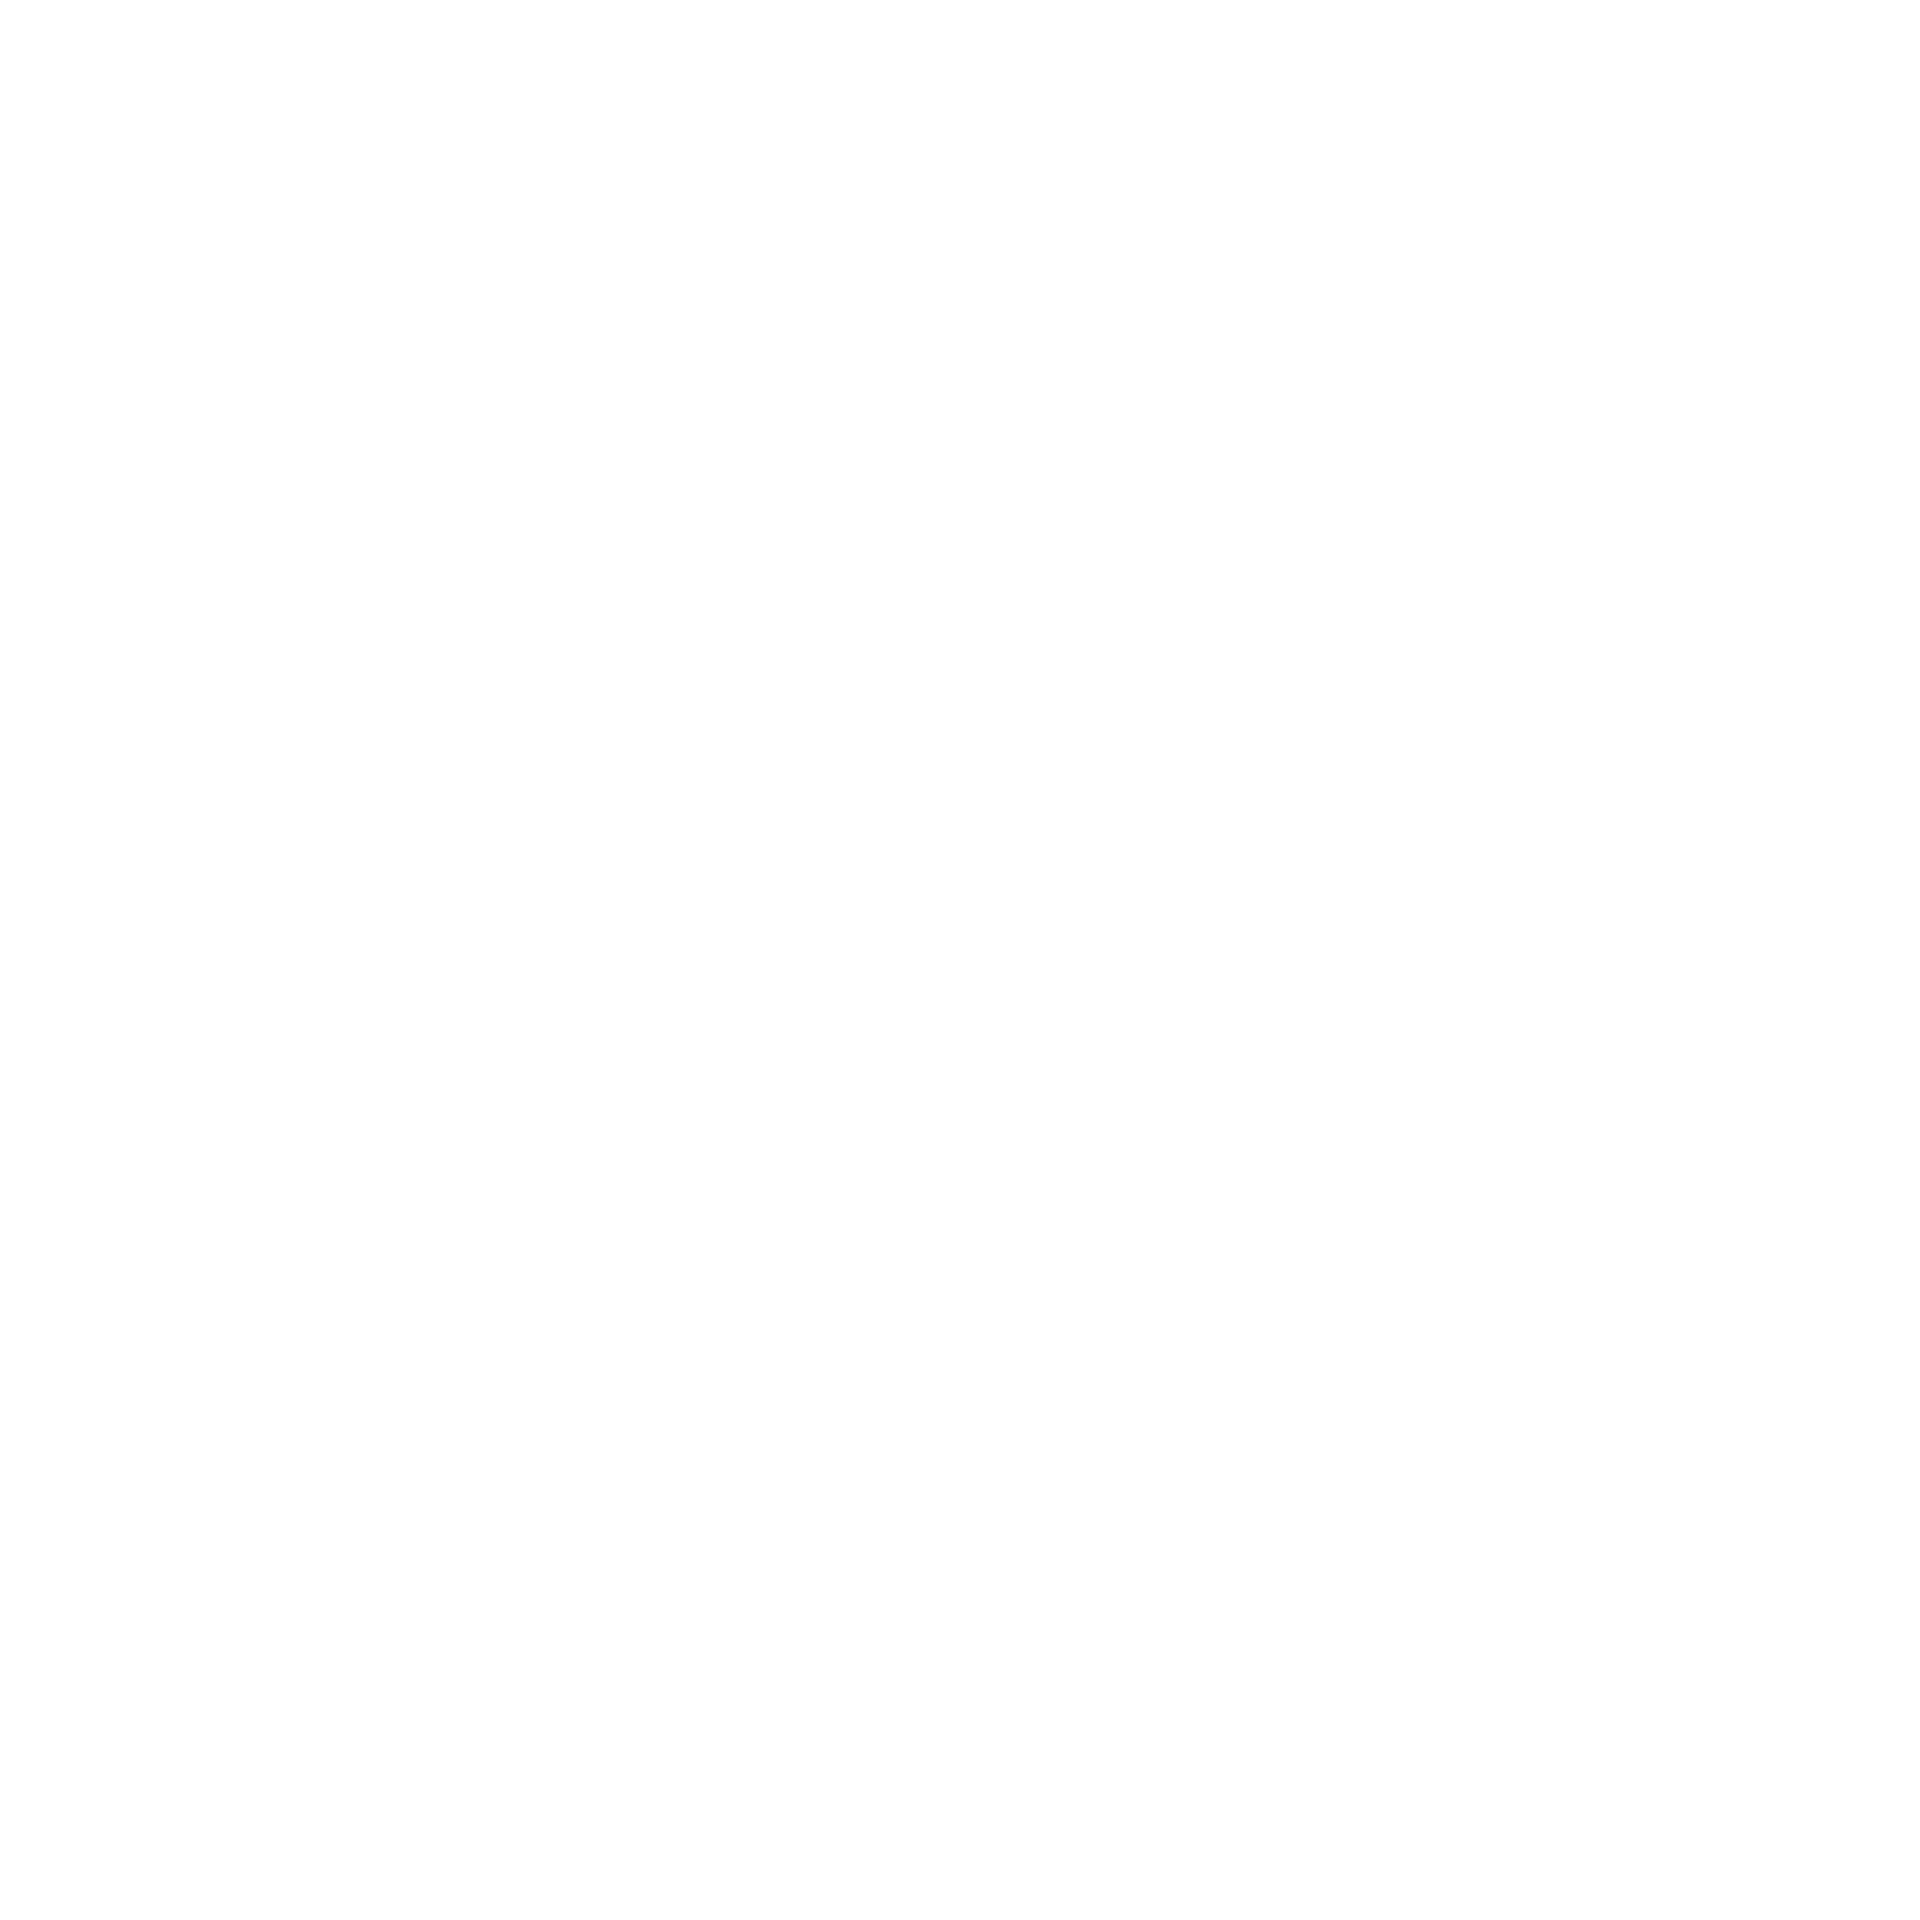 Hanover - The International Exchange Platform